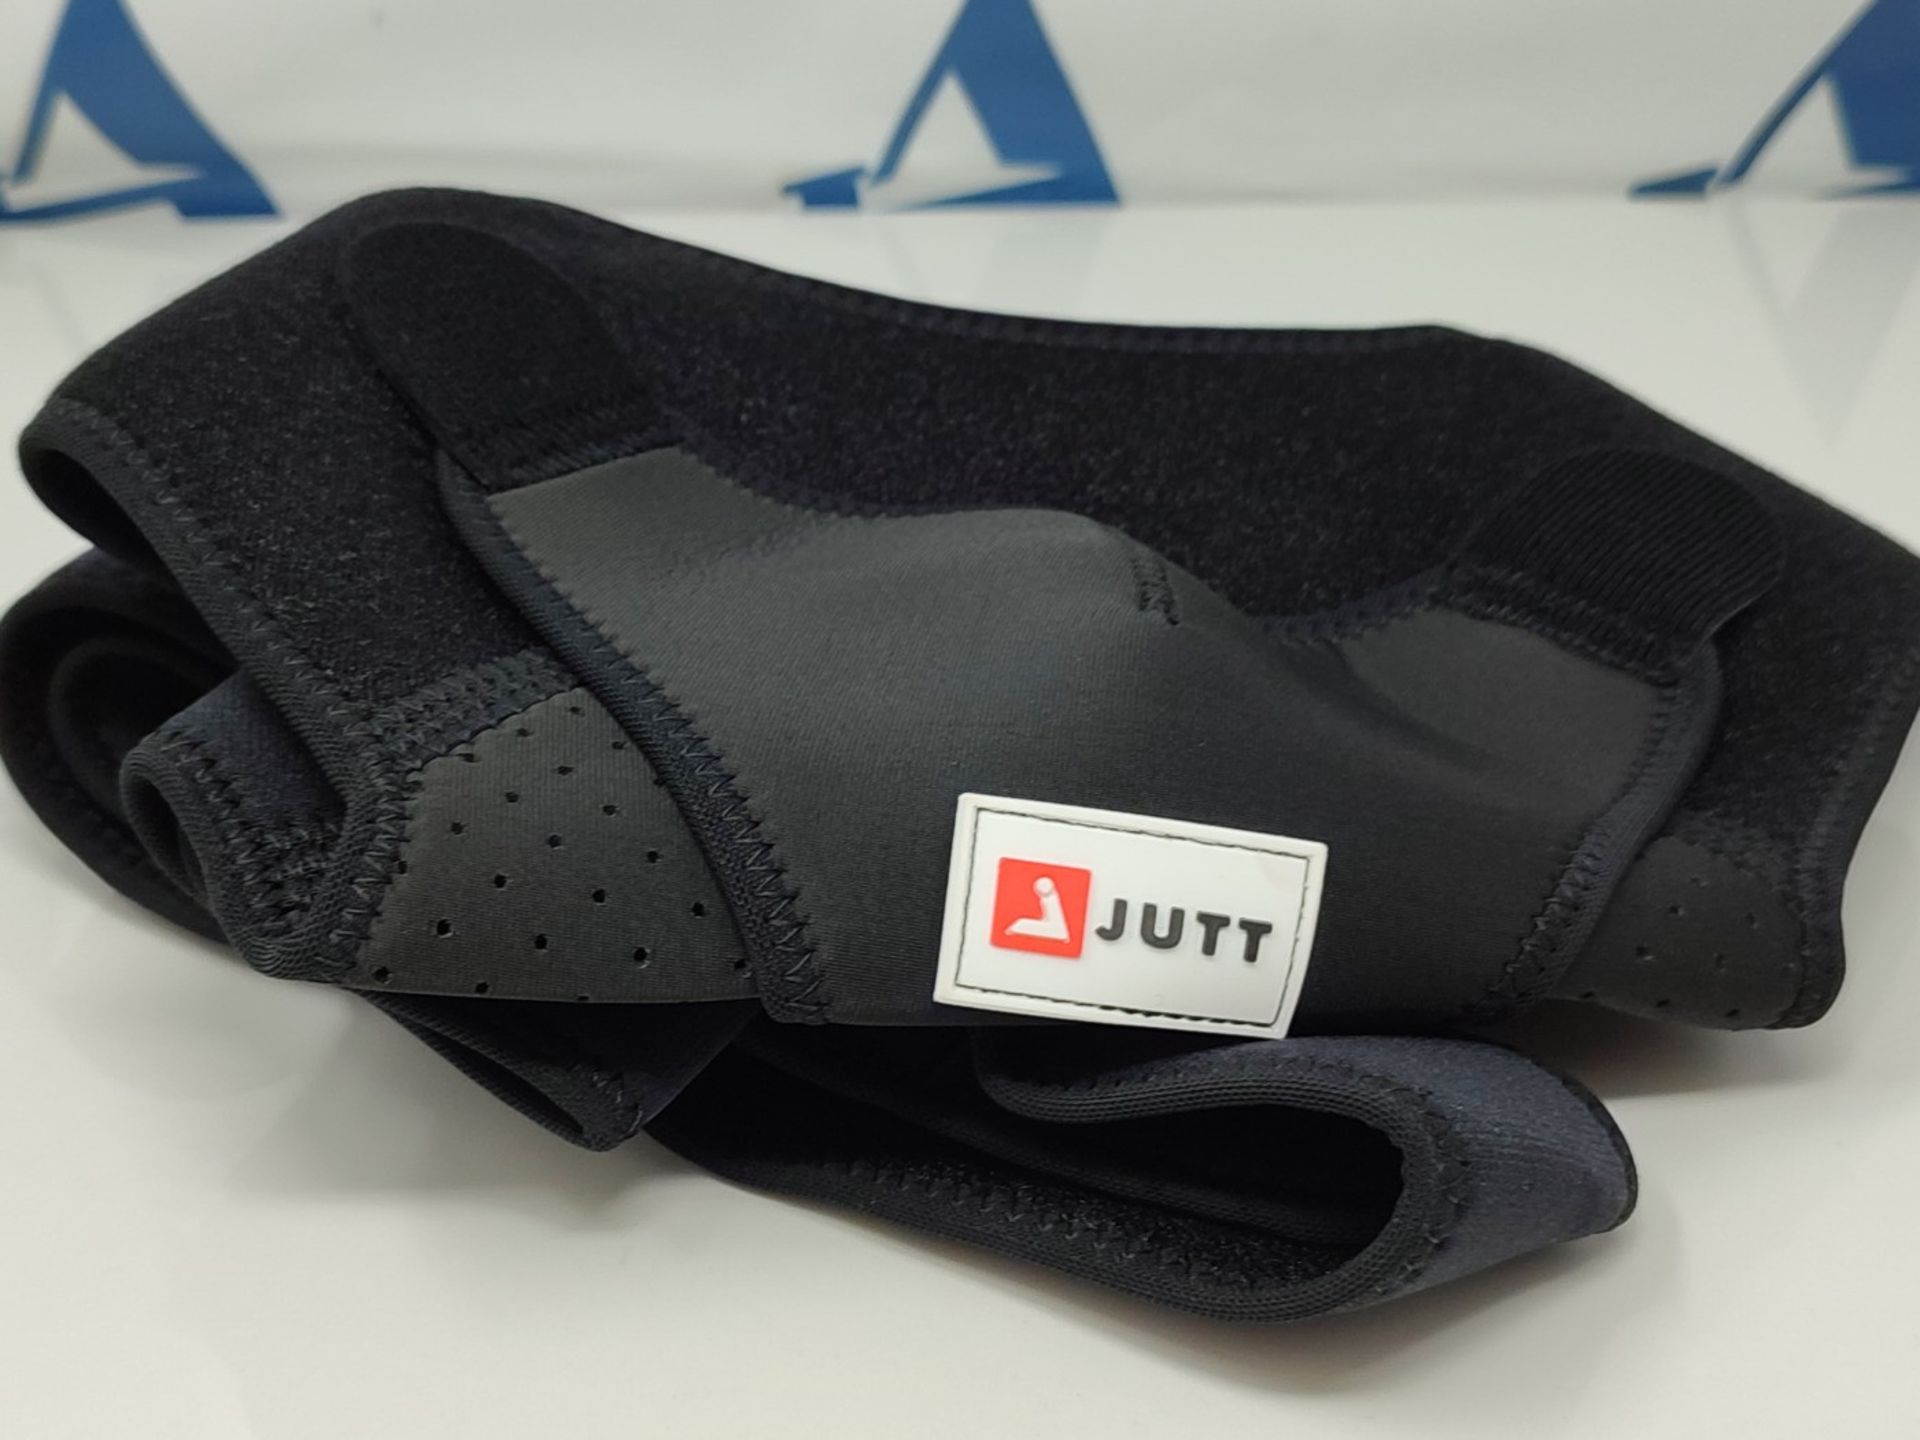 JUTT Adjustable Shoulder Support Brace - For Men Women Rotator Cuff for Dislocated Joi